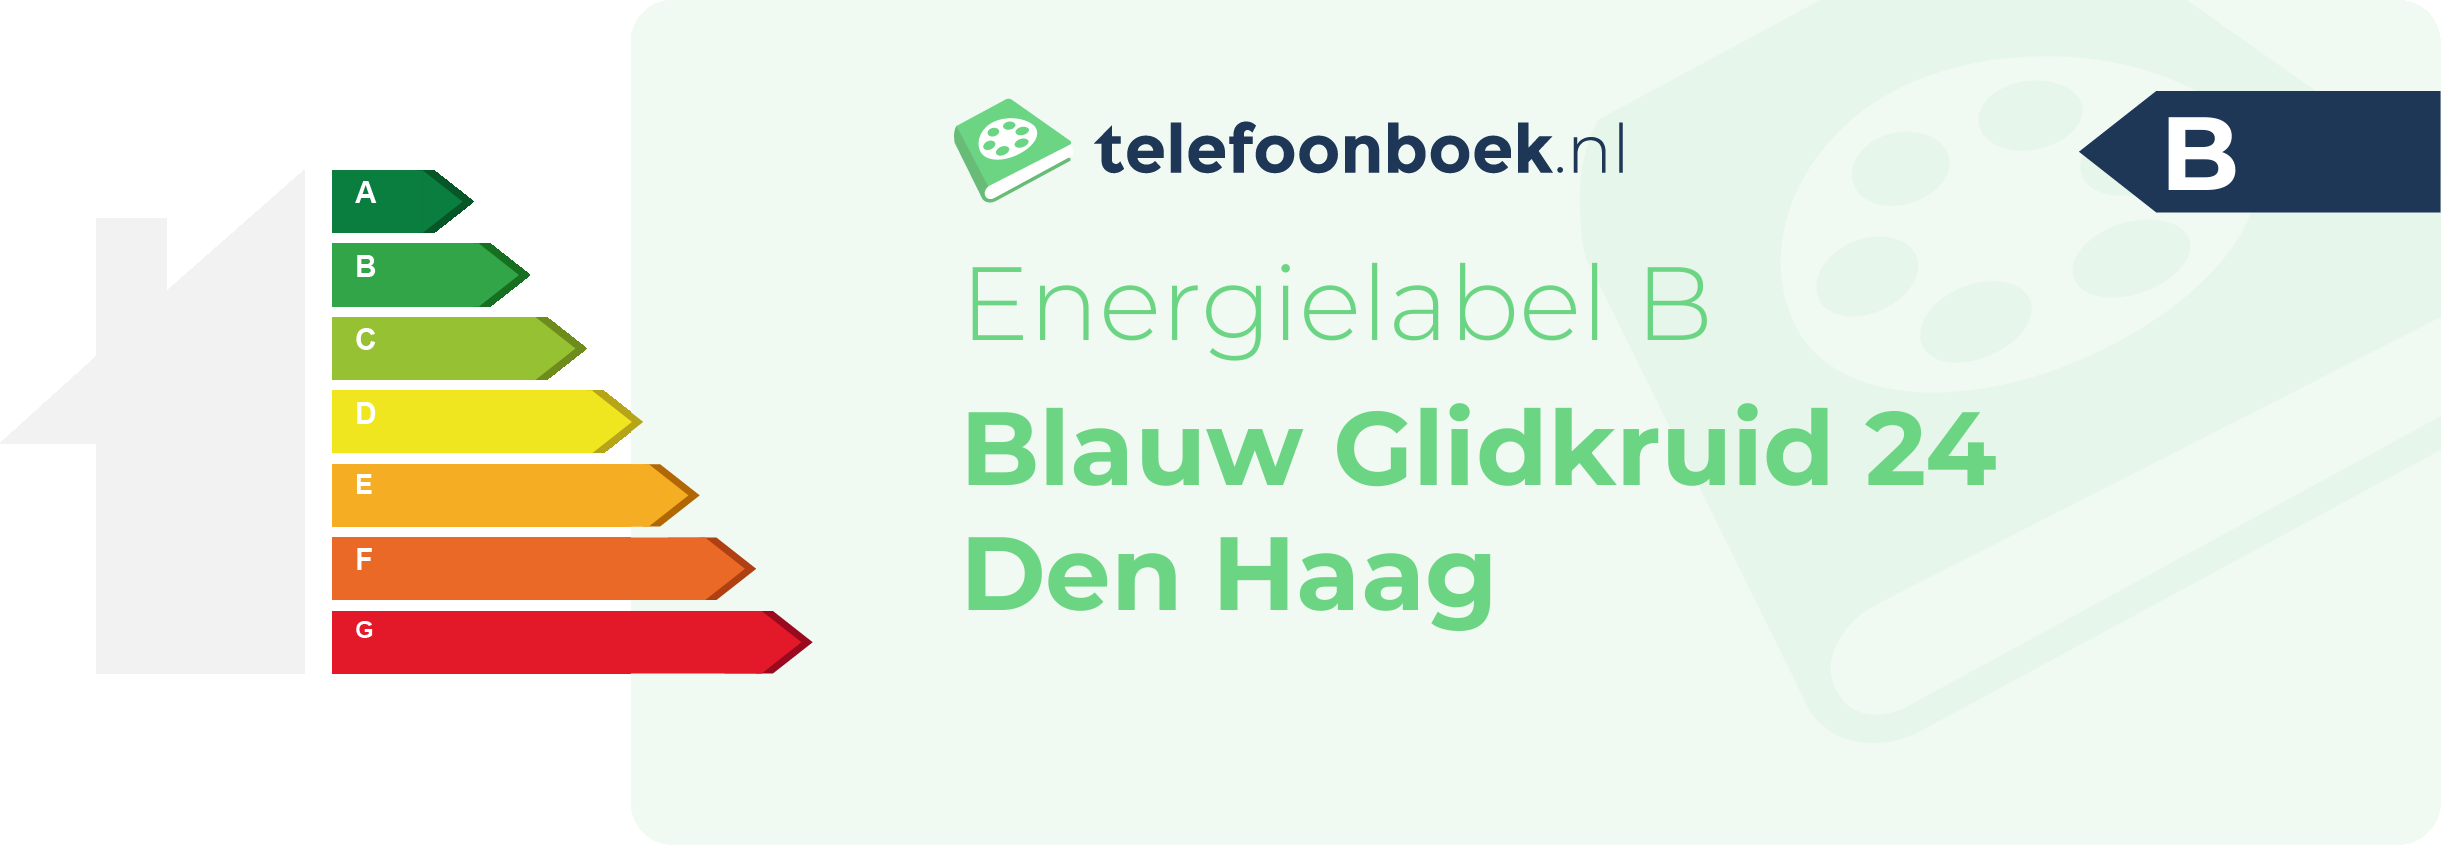 Energielabel Blauw Glidkruid 24 Den Haag